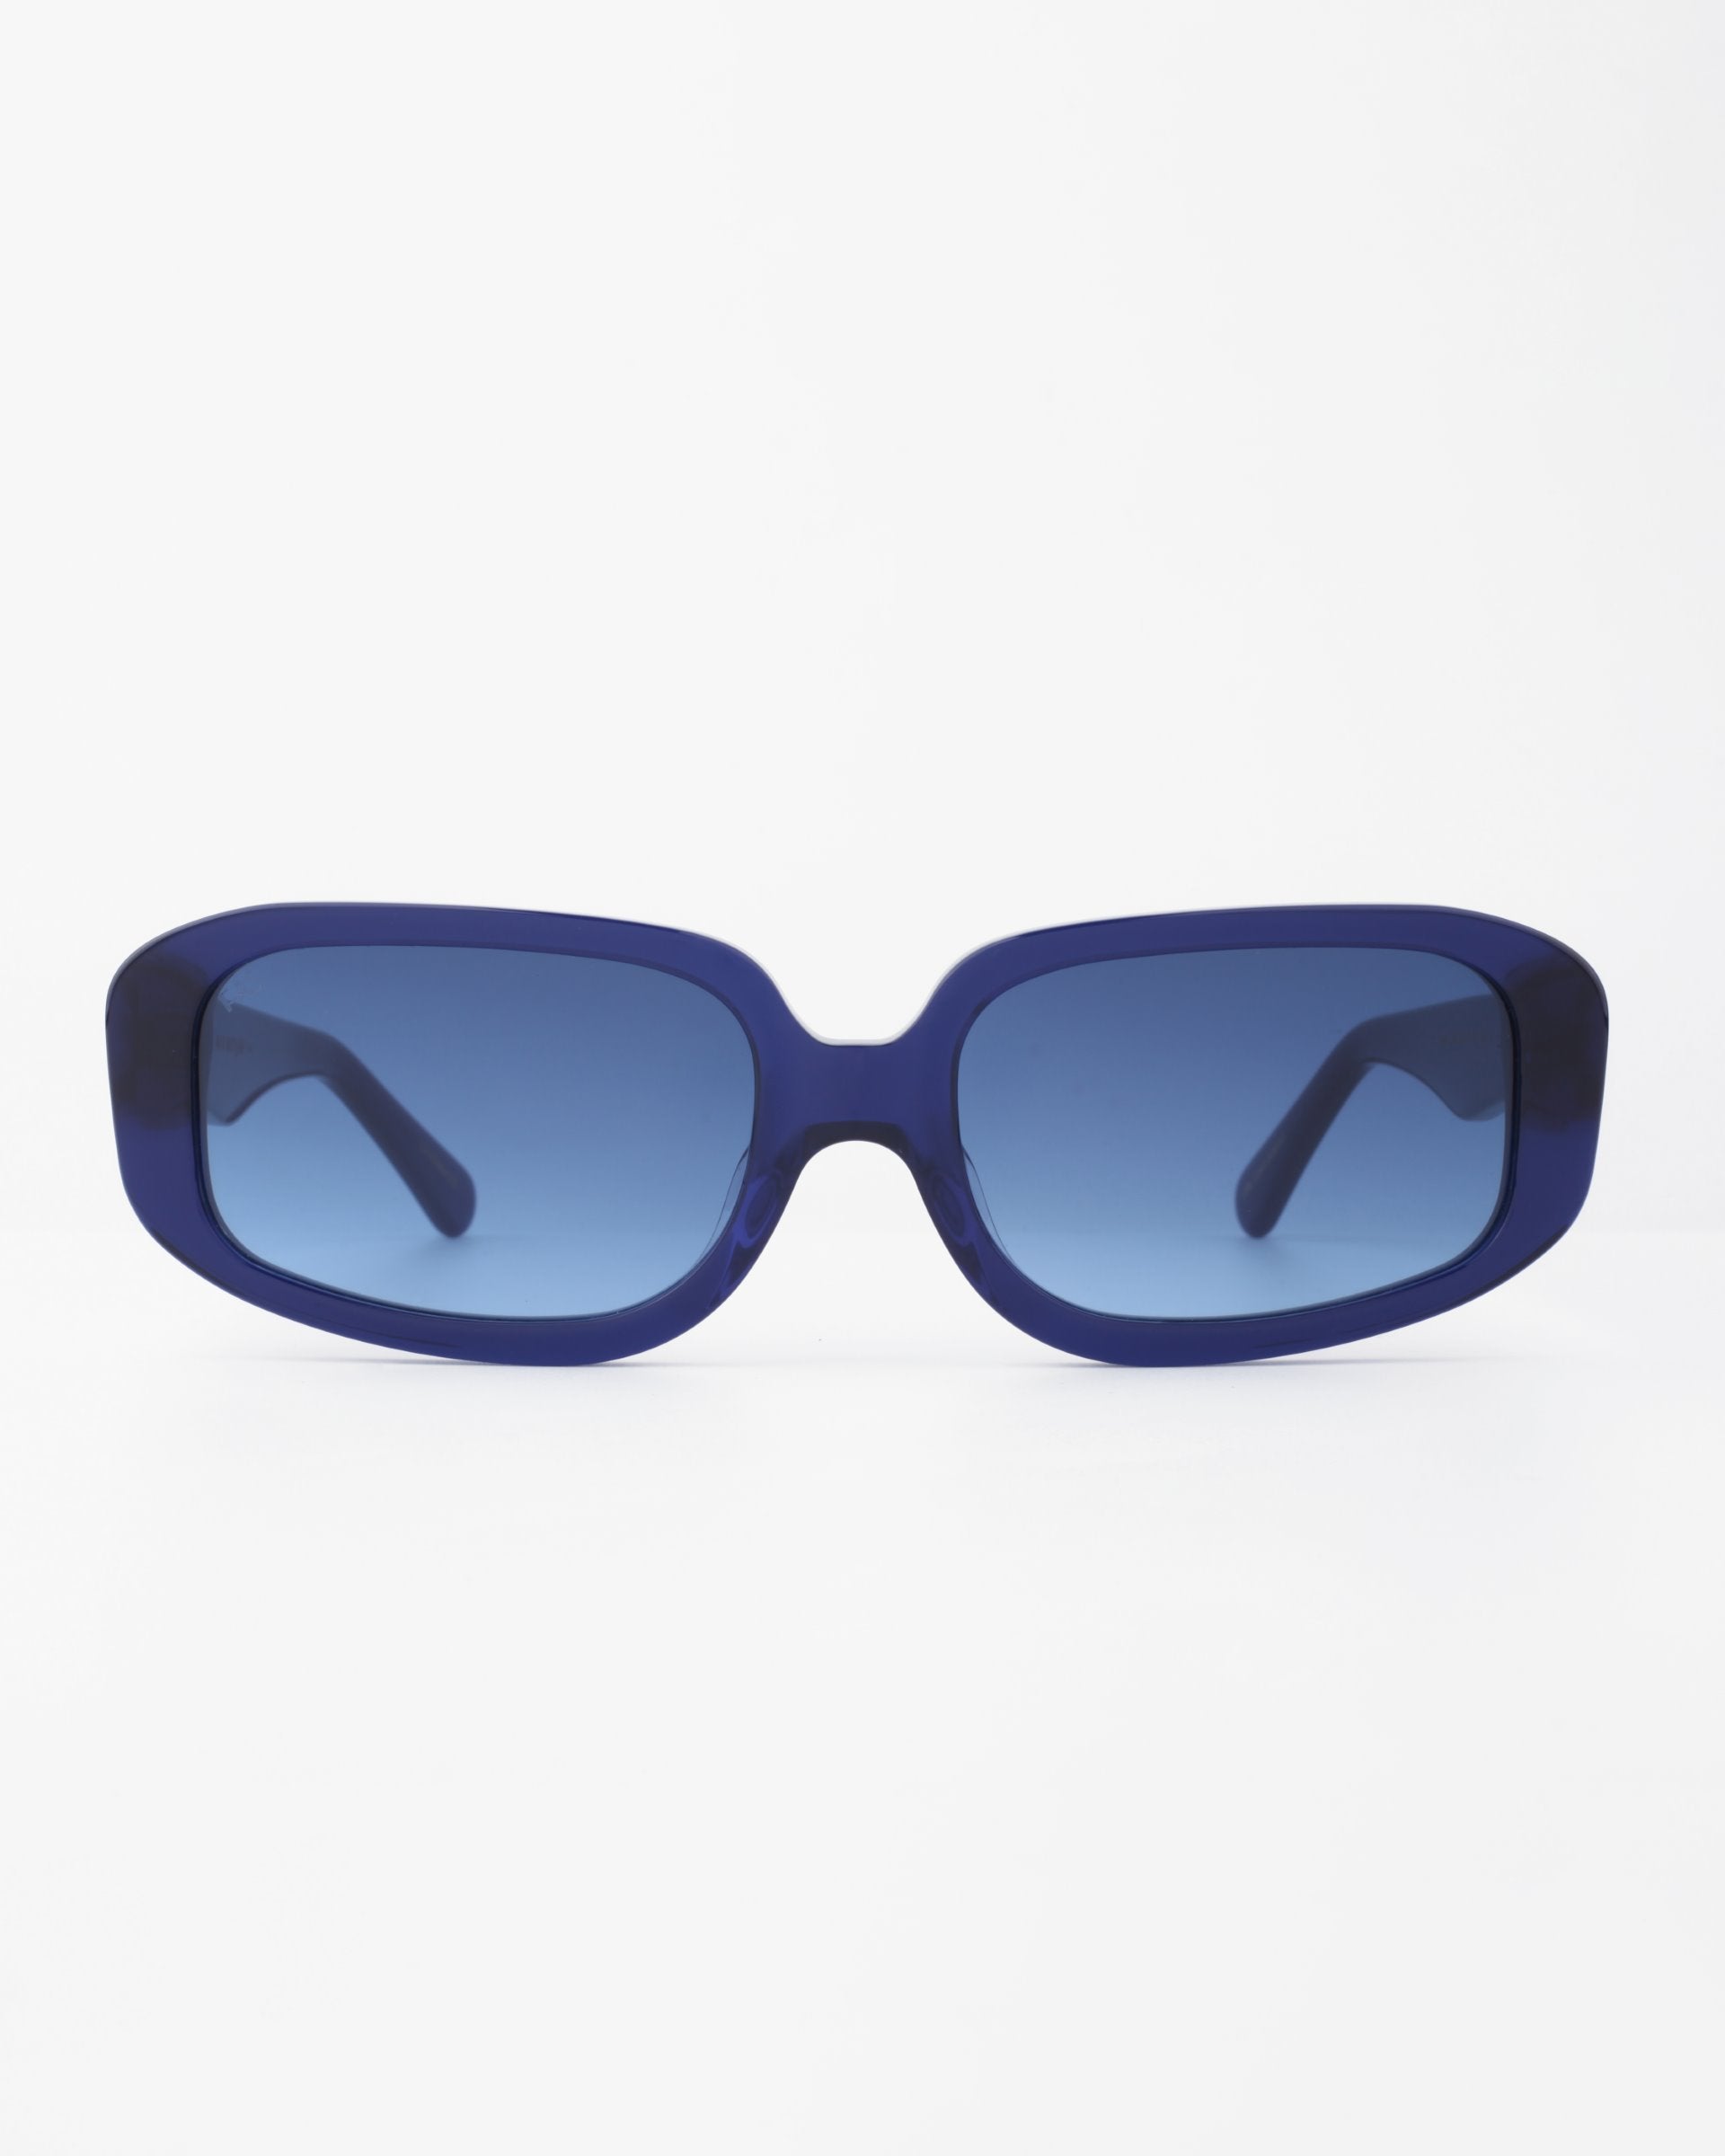 A pair of For Art&#39;s Sake® Bolt rectangular sunglasses with dark blue handmade acetate frames and blue-tinted, shatter-resistant nylon lenses, displayed against a white background.